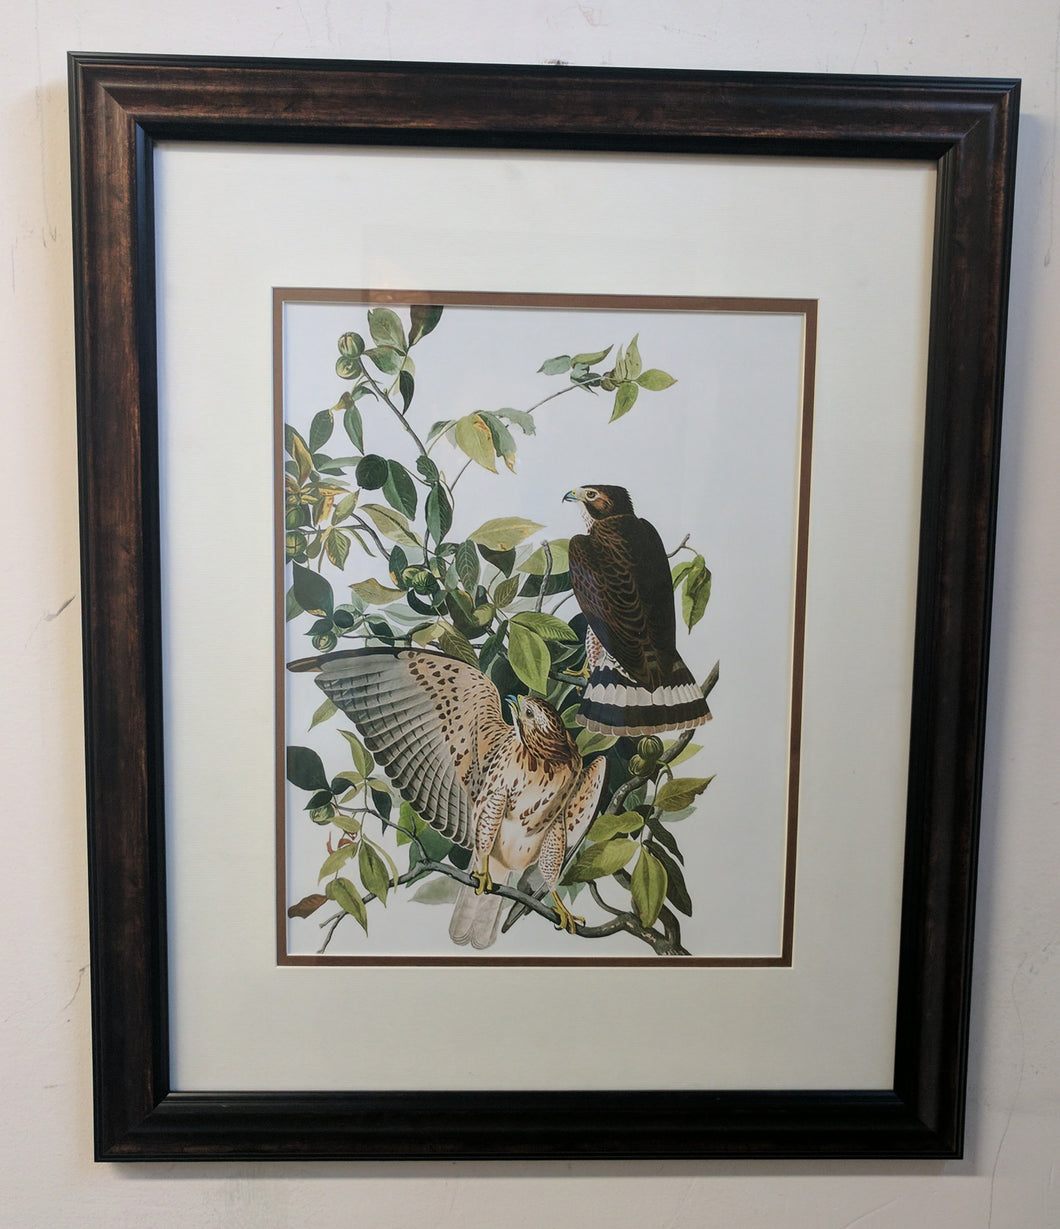 5122 Two Hawks in a Tree After Audubon